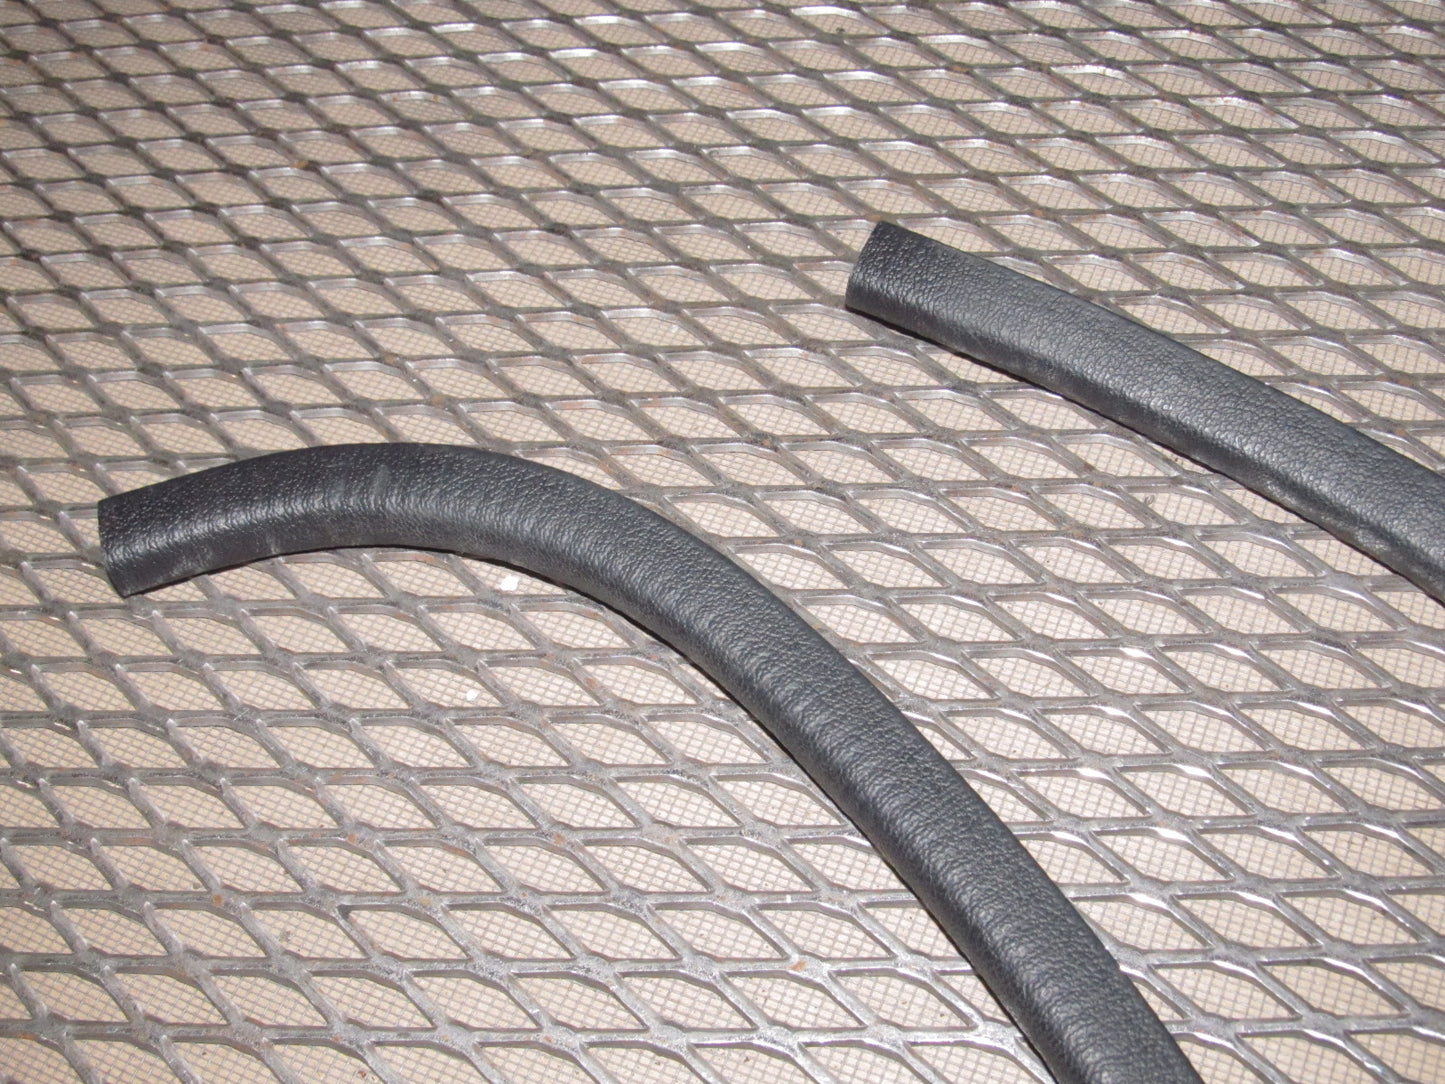 94 95 96 97 Mazda Miata OEM Chassis Belt Line Moulding Stripping